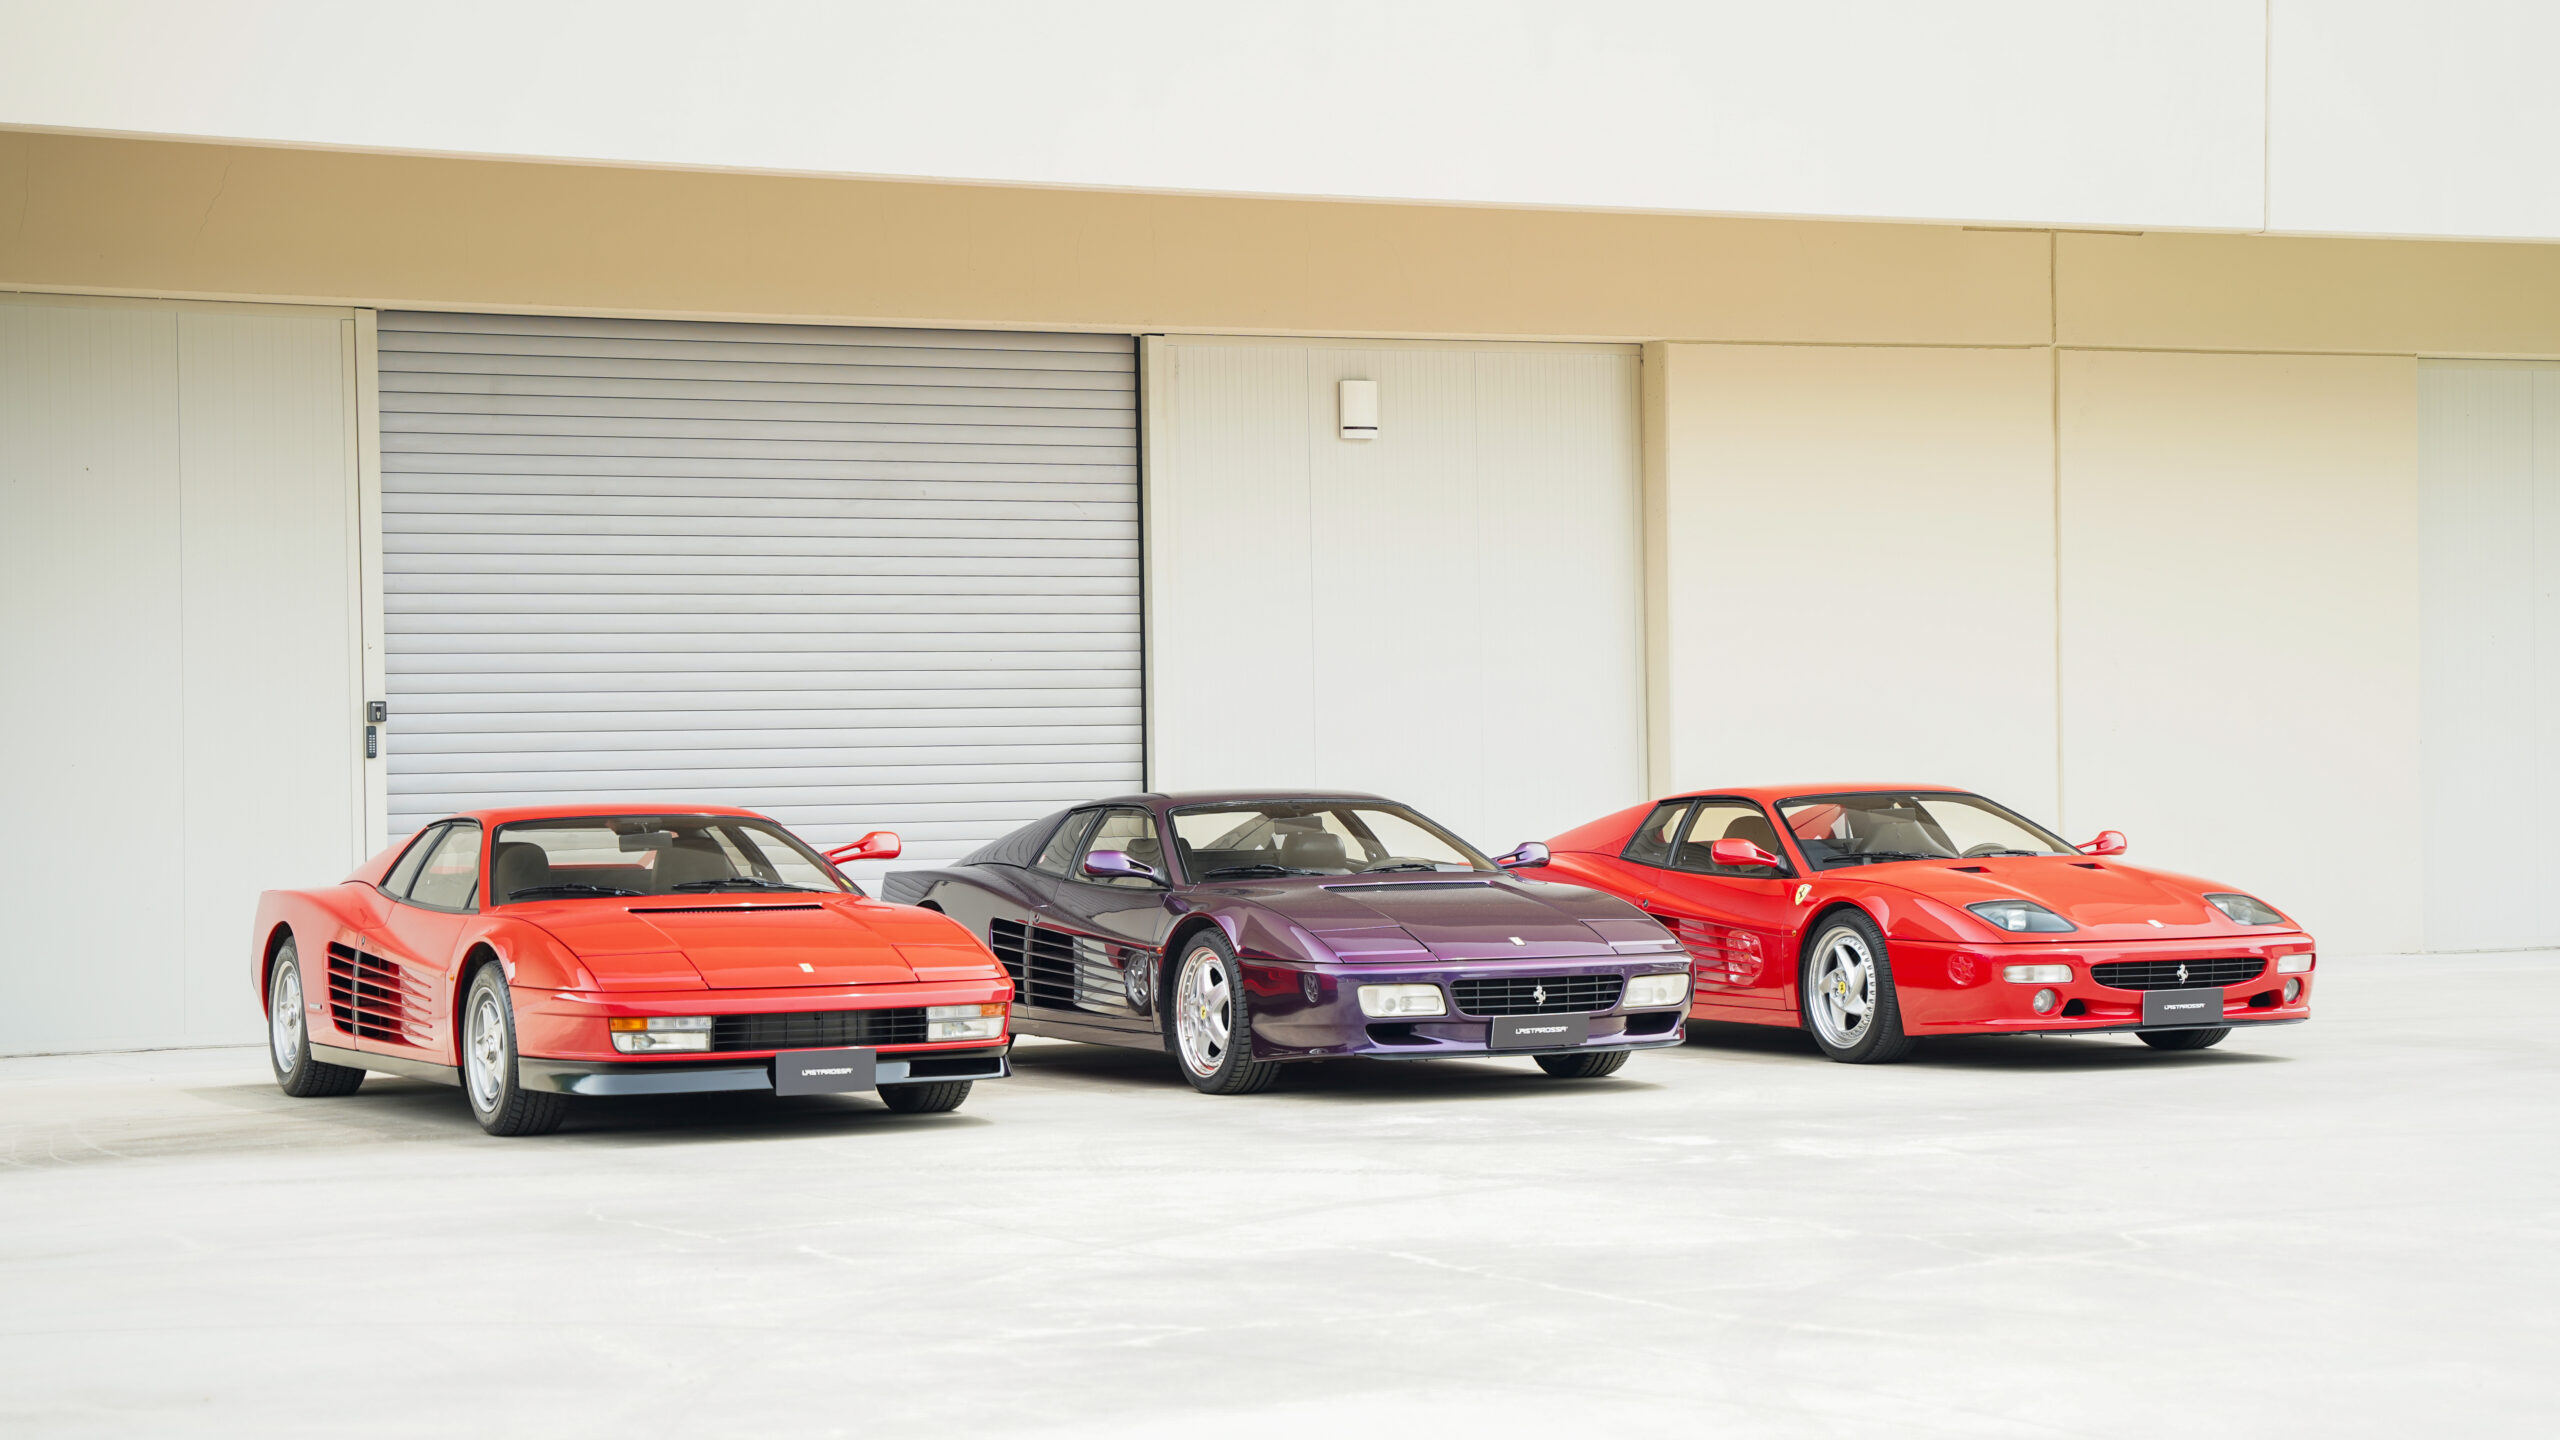 These Three Flavors of Ferrari Testarossa Have Distinct Personalities